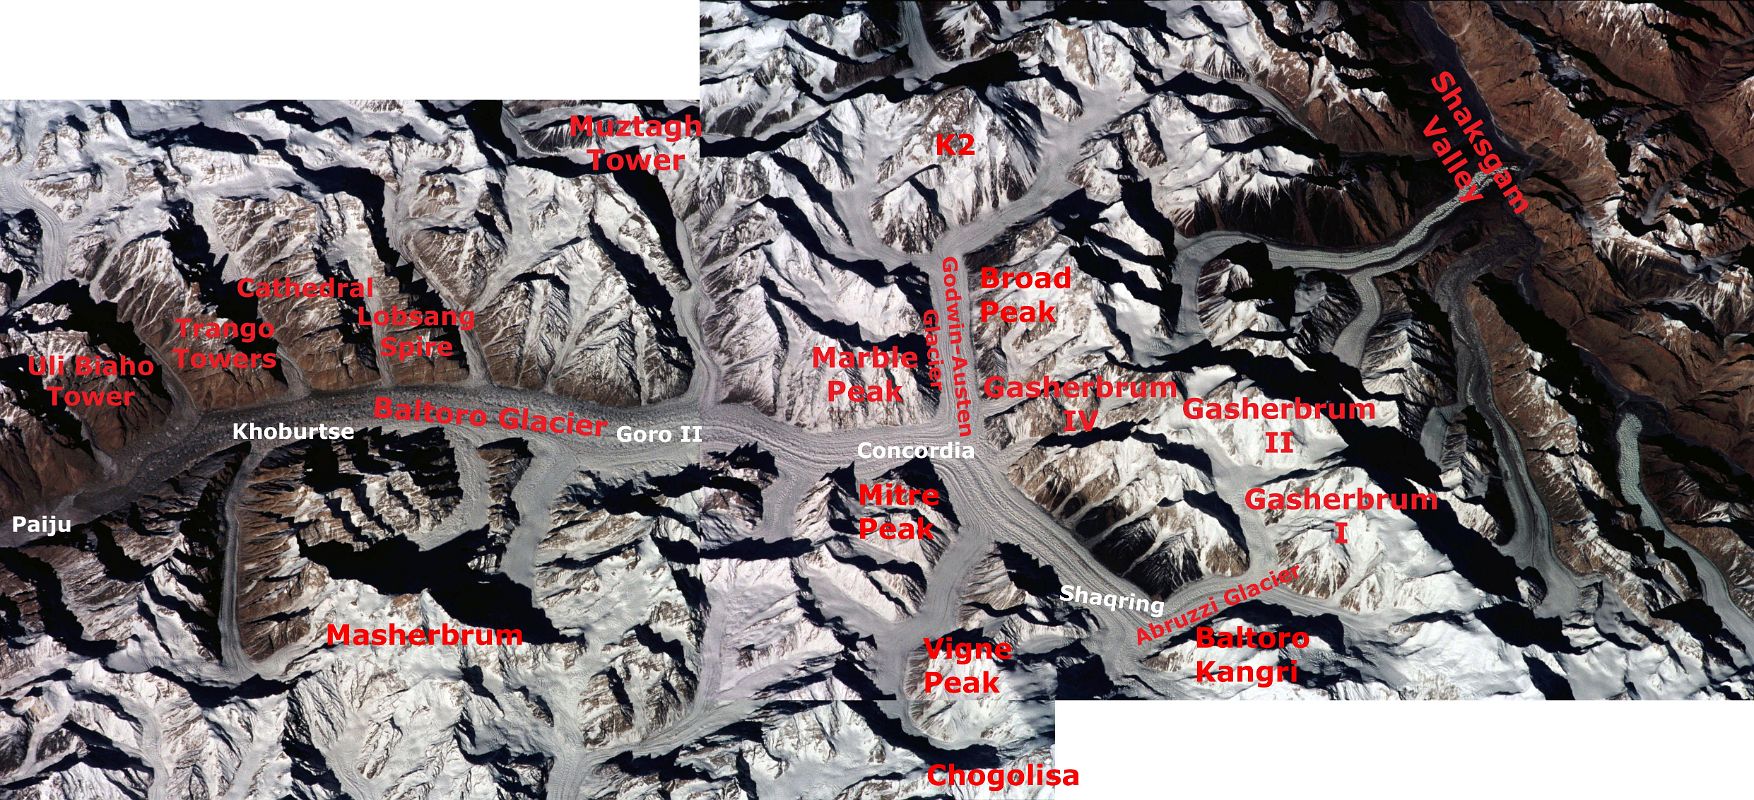 Nasa With Labels Baltoro Glacier K2 Broad Peak Gasherbrum I, II and IV Masherbrum ISS001-343-26 and 27 Baltoro Glacier from Paiju to Concordia with K2, Broad Peak, Gasherbrum I, Gasherbrum II and Gasherbrum IV, Masherbrum  - Nasa Image ISS001-343-26 and 343-27.